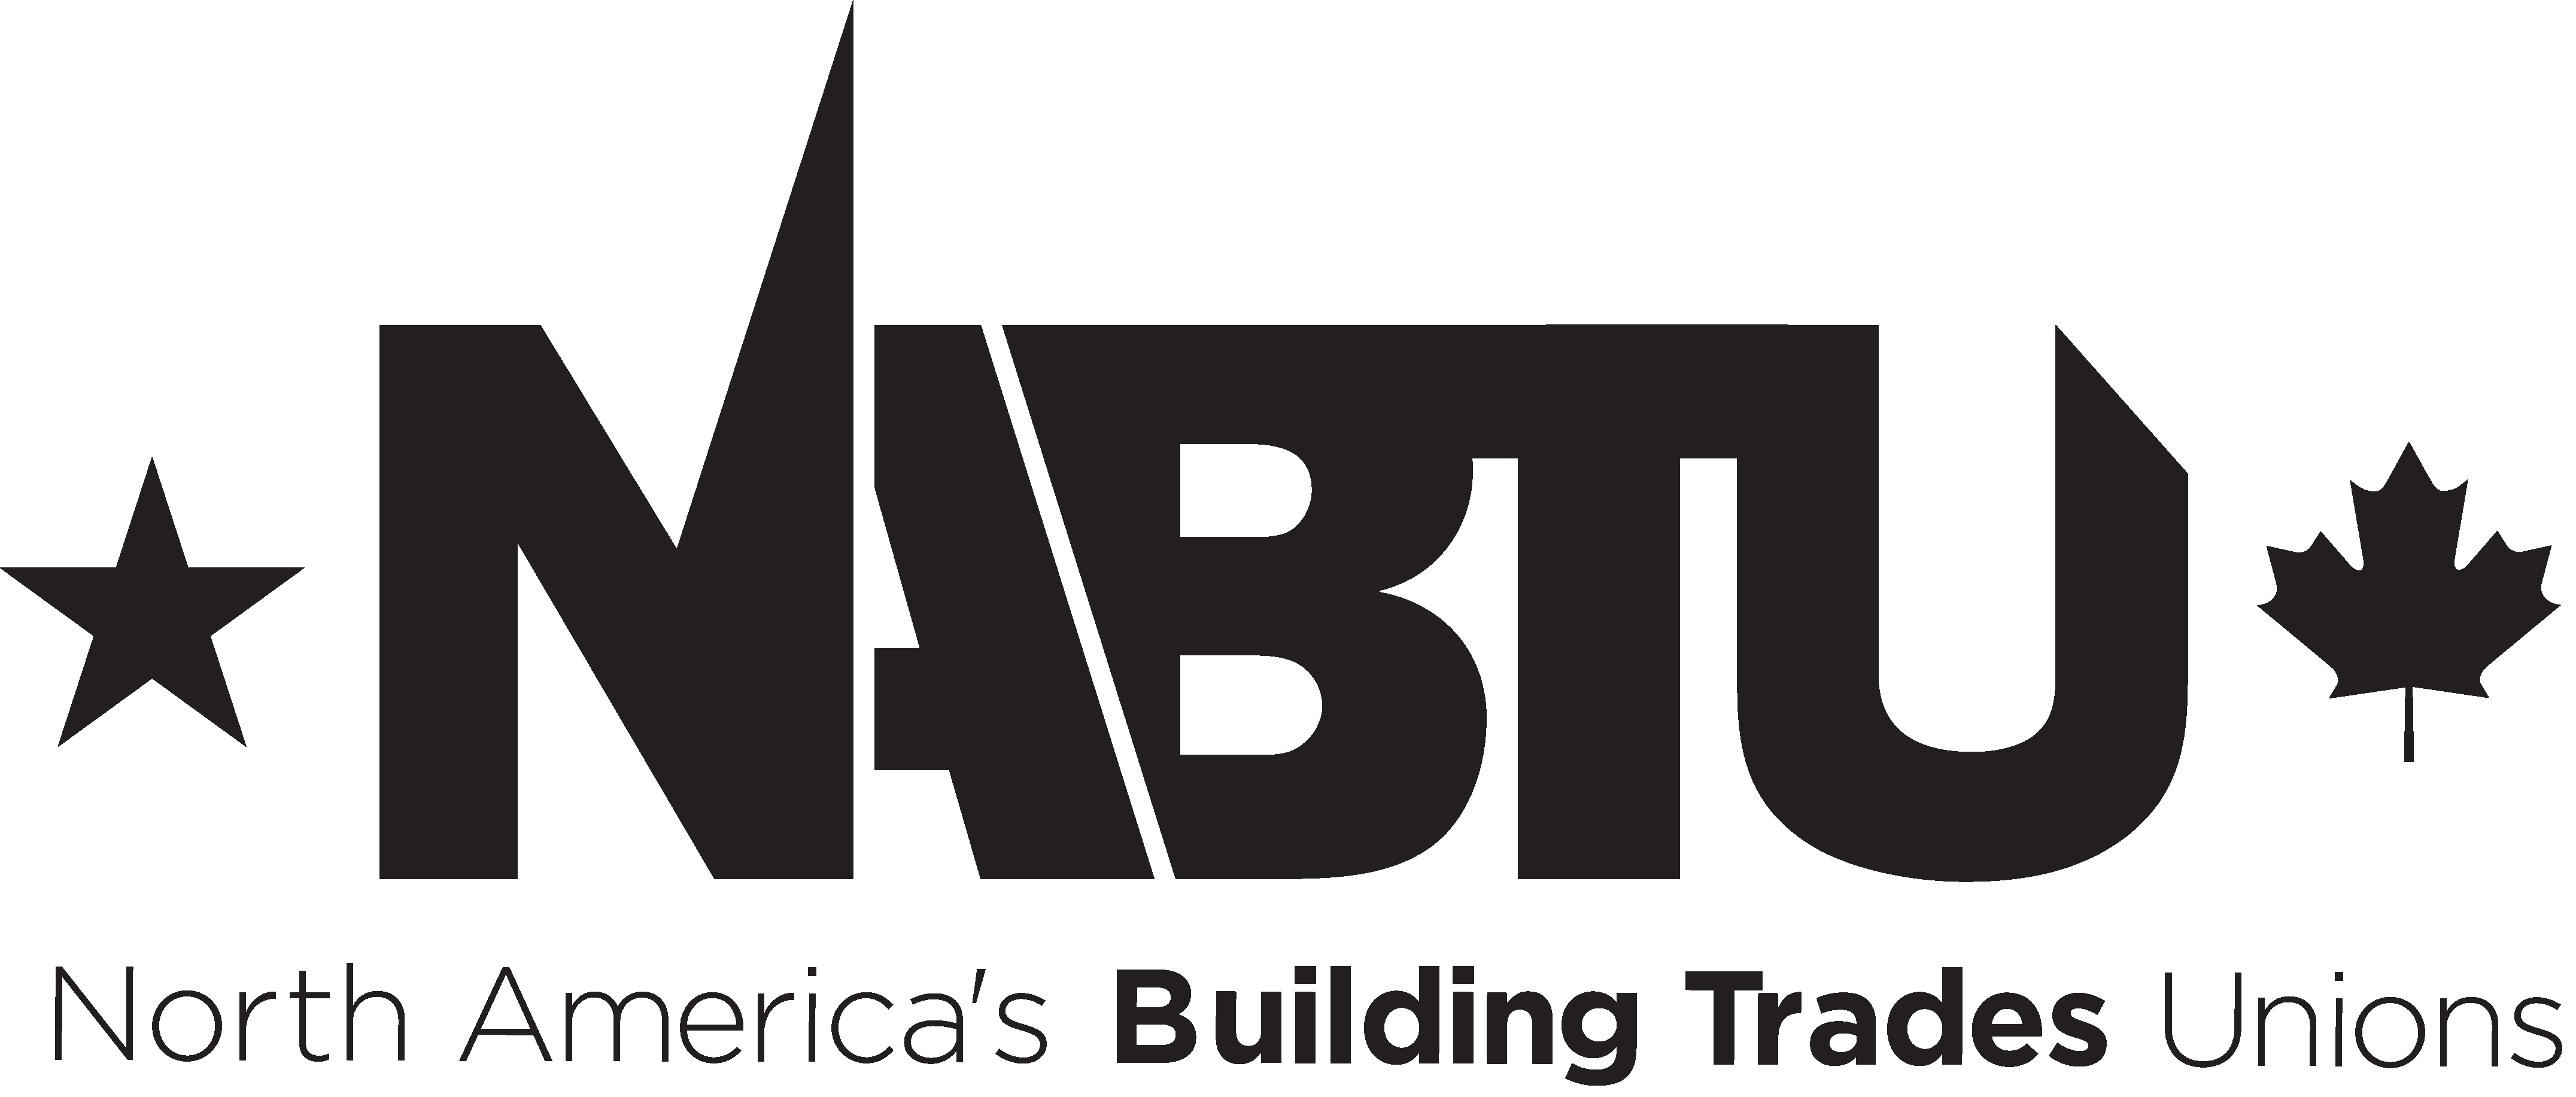 North American's Building Trades Union Logo